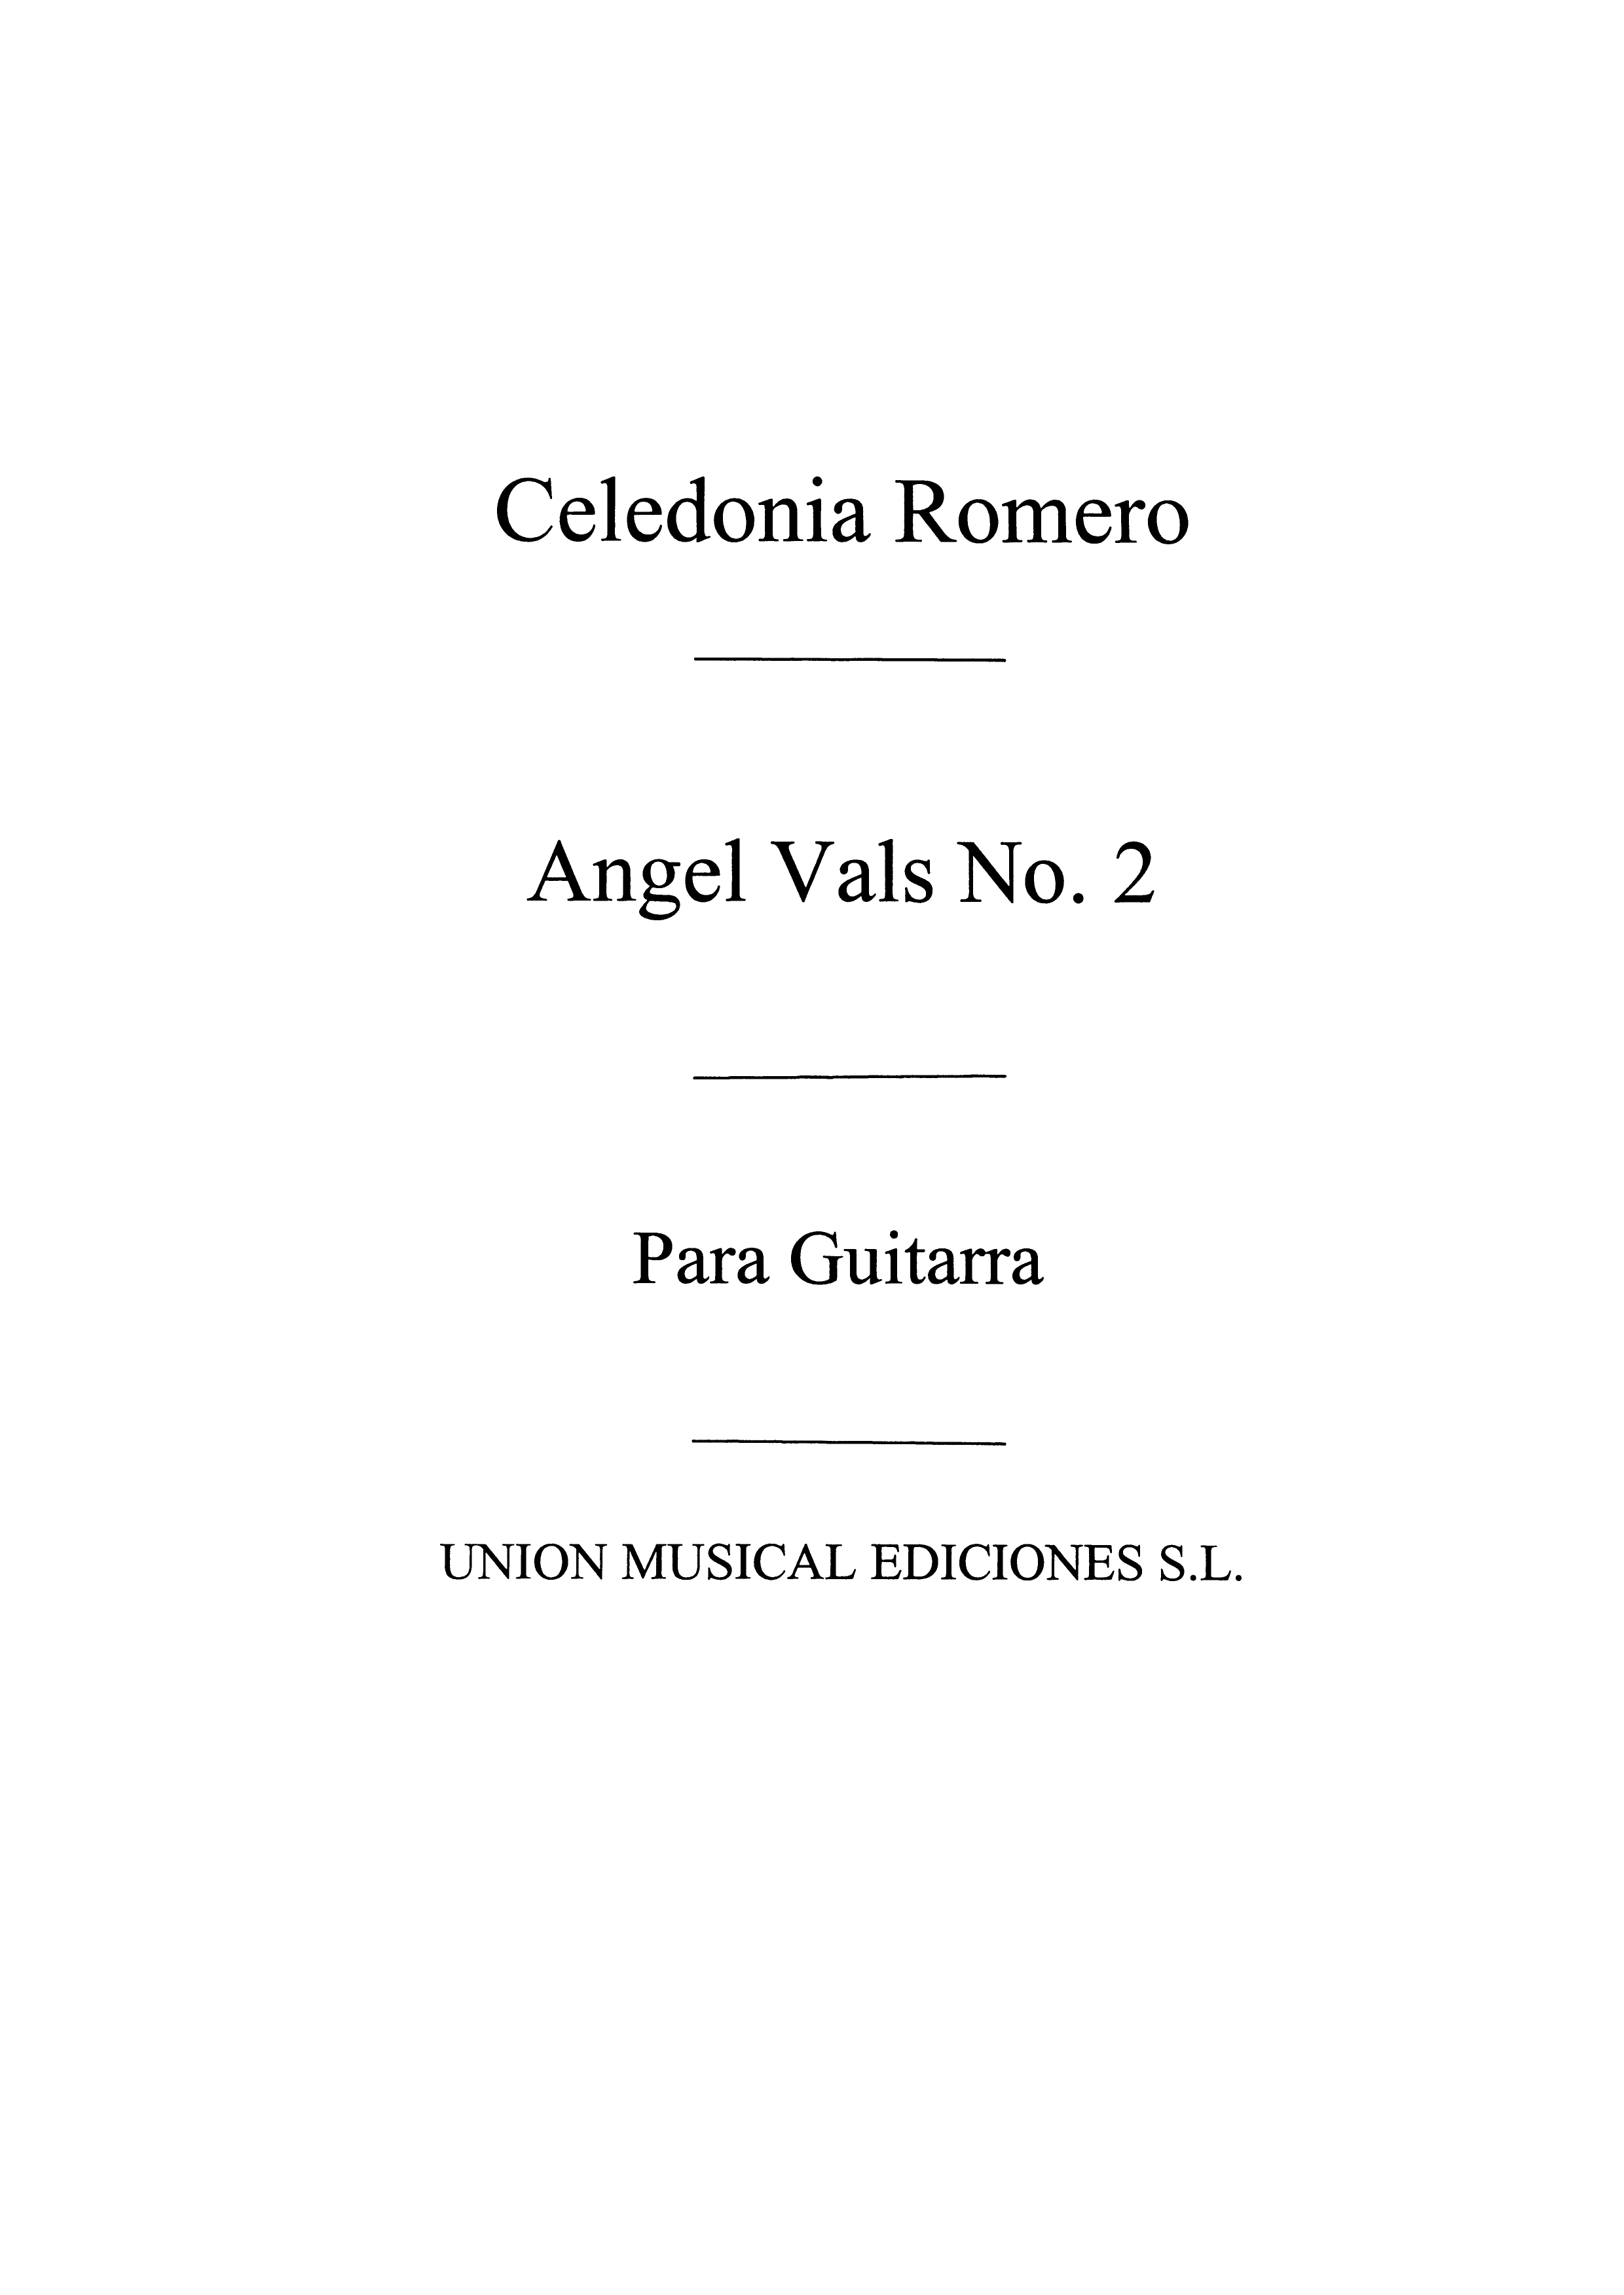 Celedonio Romero: Angel Vals No.1: Guitar: Instrumental Work